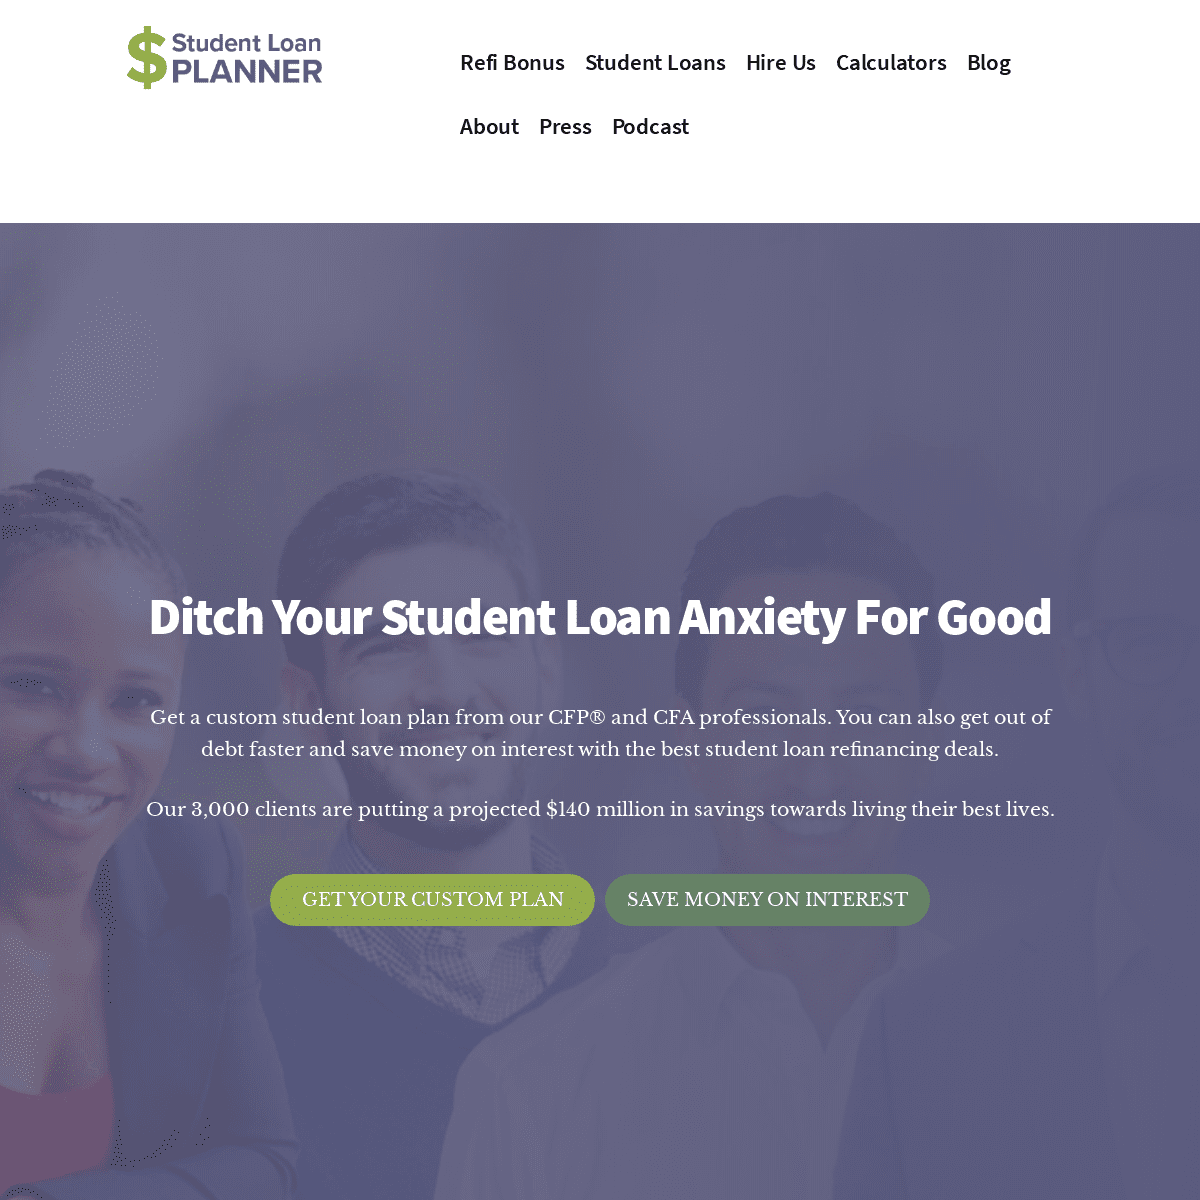 A complete backup of studentloanplanner.com